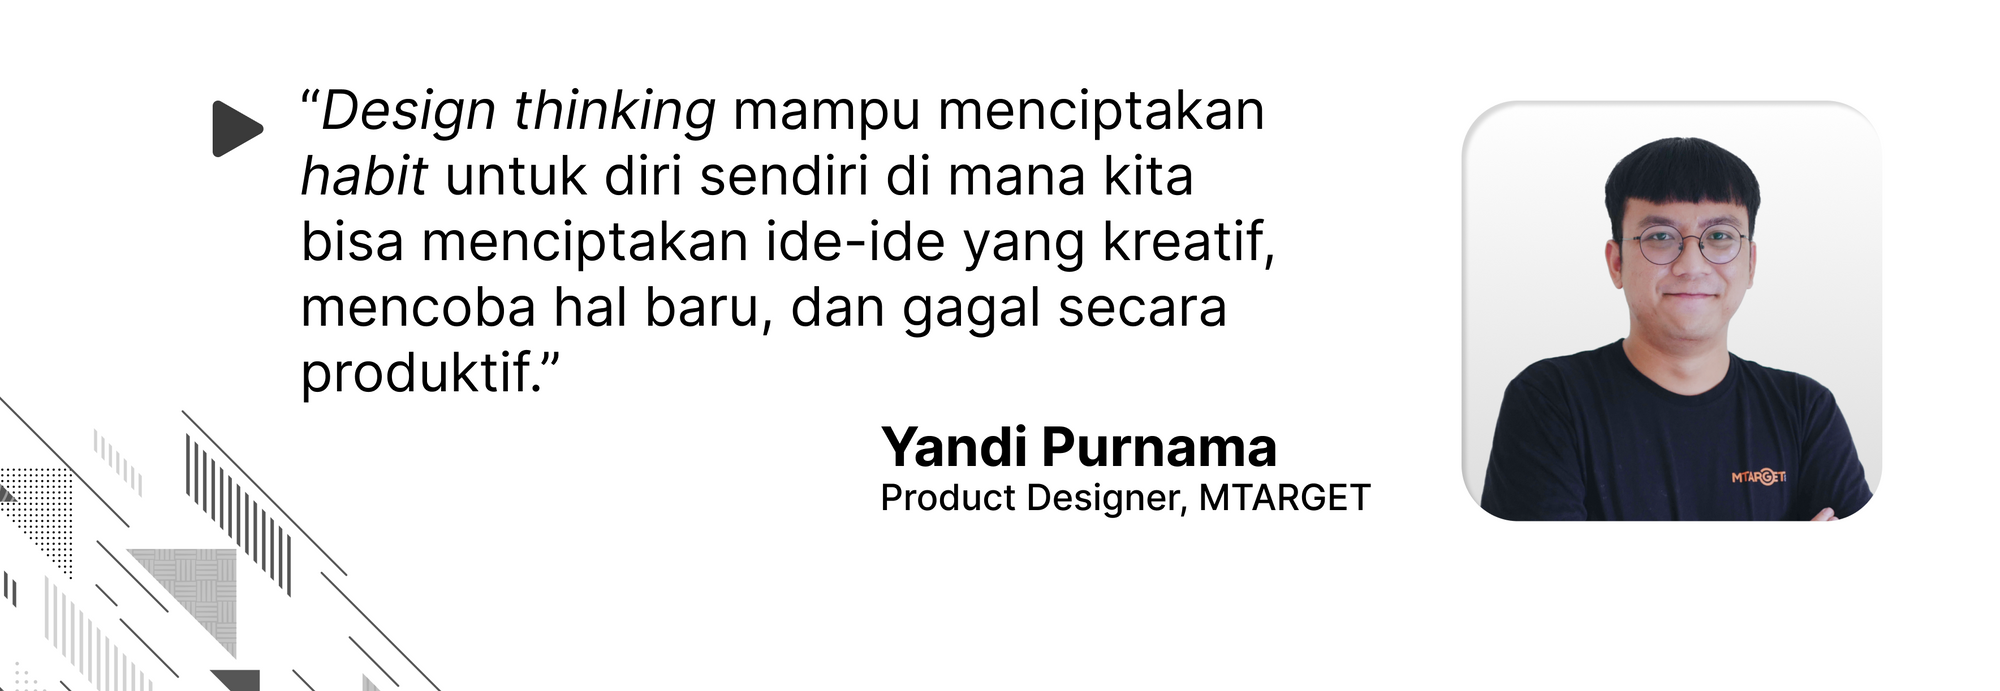 Quote oleh Yandi Purnama mengenai konsep design thinking yang diterapkan dalam kehidupan sehari-hari.